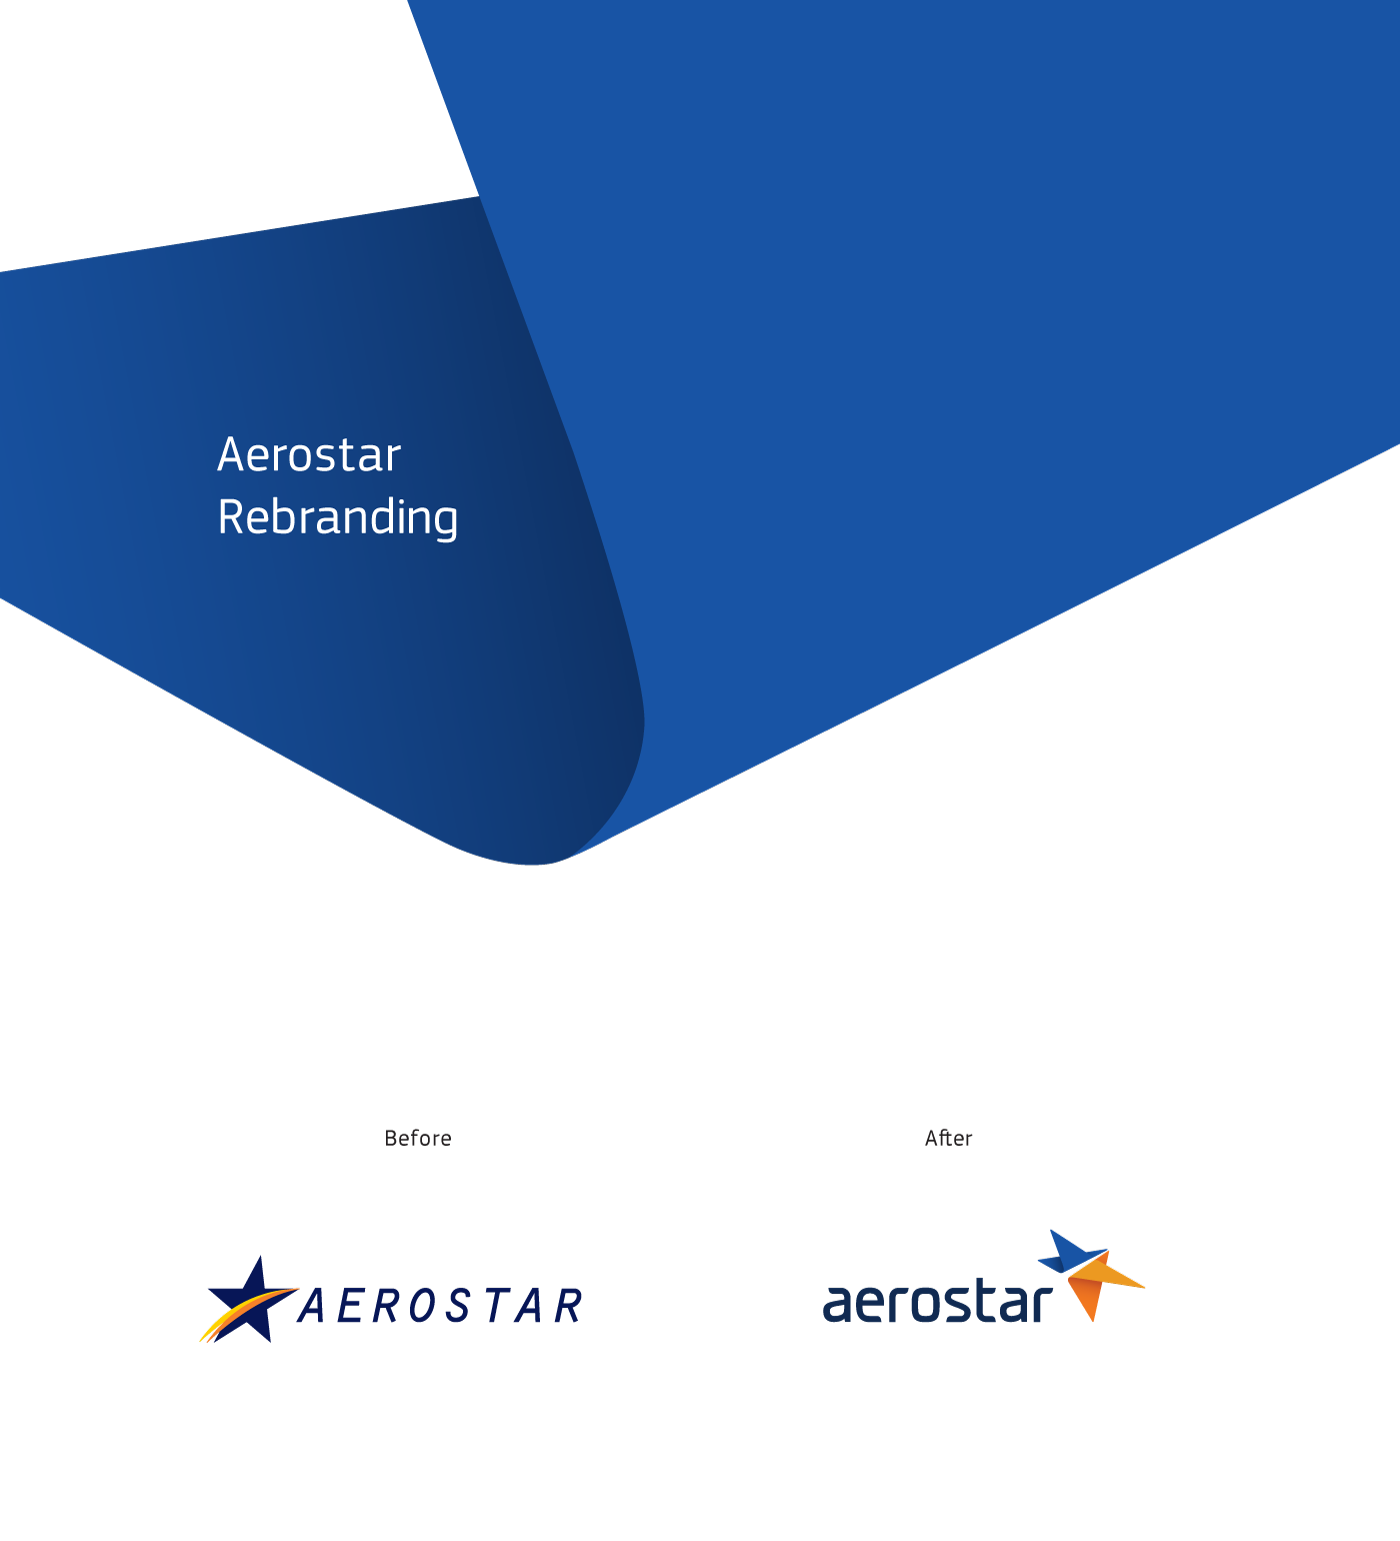 aerostar  broker airplane  Aero  star aviation  Travel brand  corporate  experience Dynamic charter Logo Design brand identity Flying